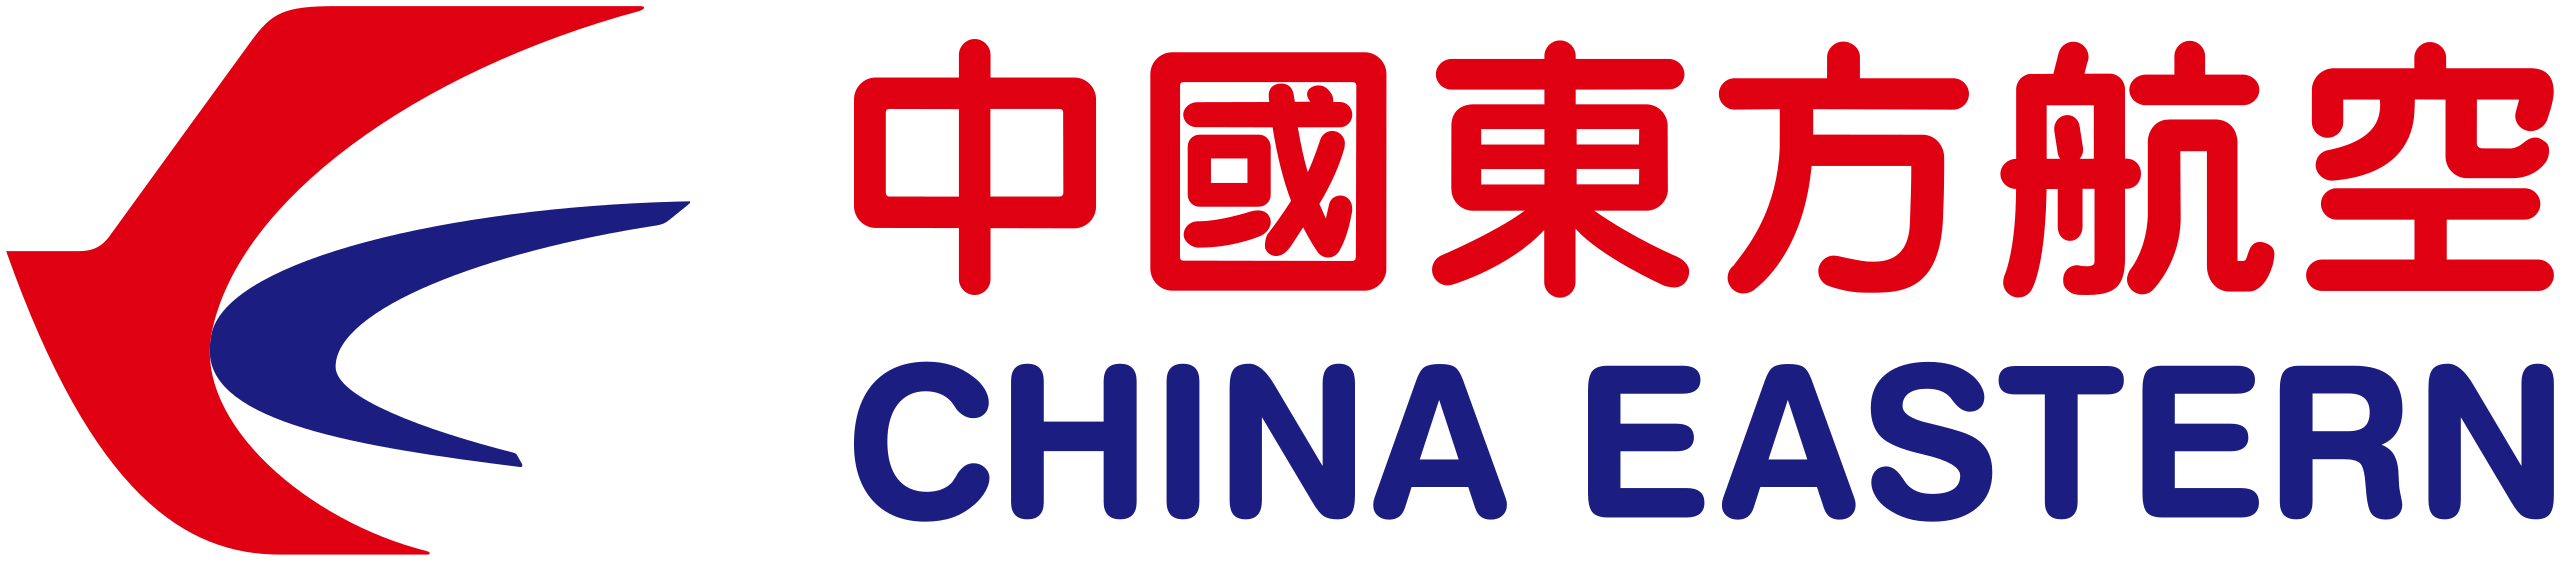 China And Chinese Logos - 149+ Best China And Chinese Logo Ideas. Free China  And Chinese Logo Maker. | 99designs